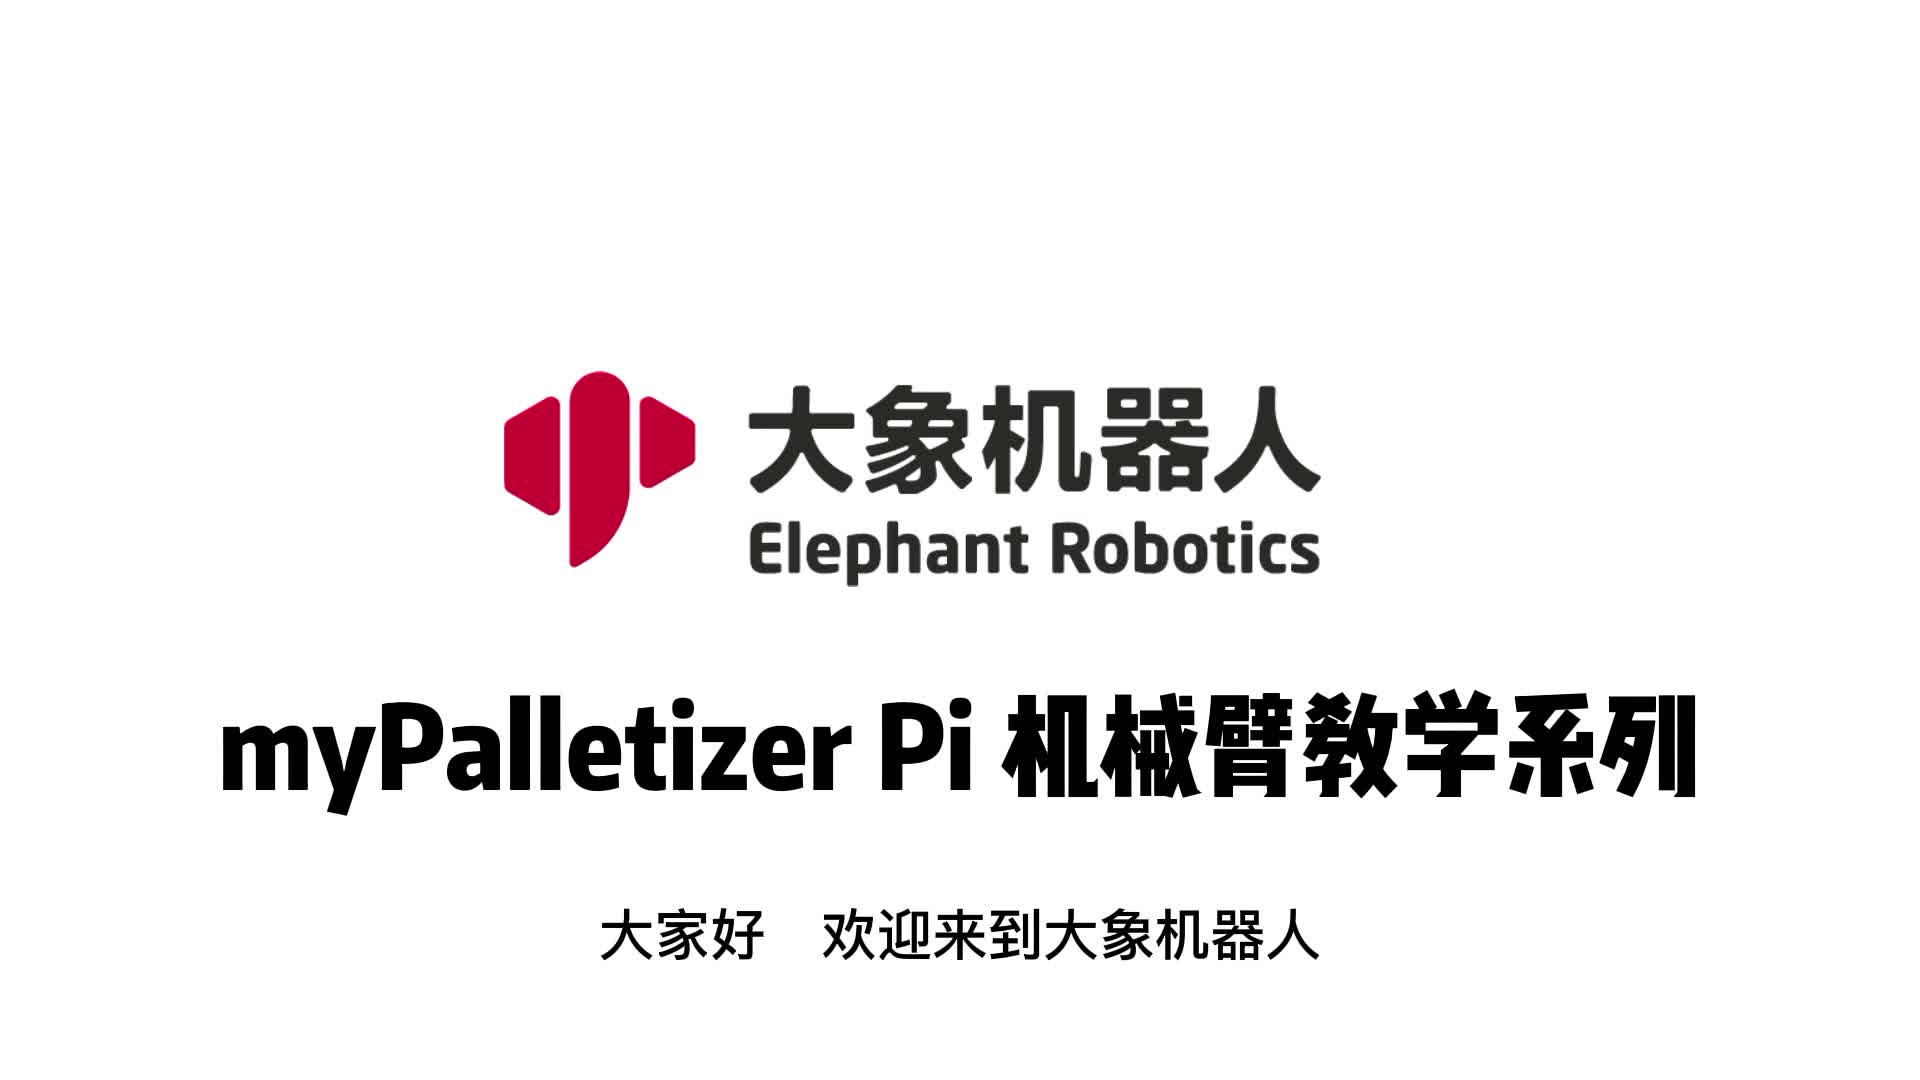 myPalletizer  260 Pi 首次使用说明#机器人 #机械臂 #协作机器人 #ROS #编程
 